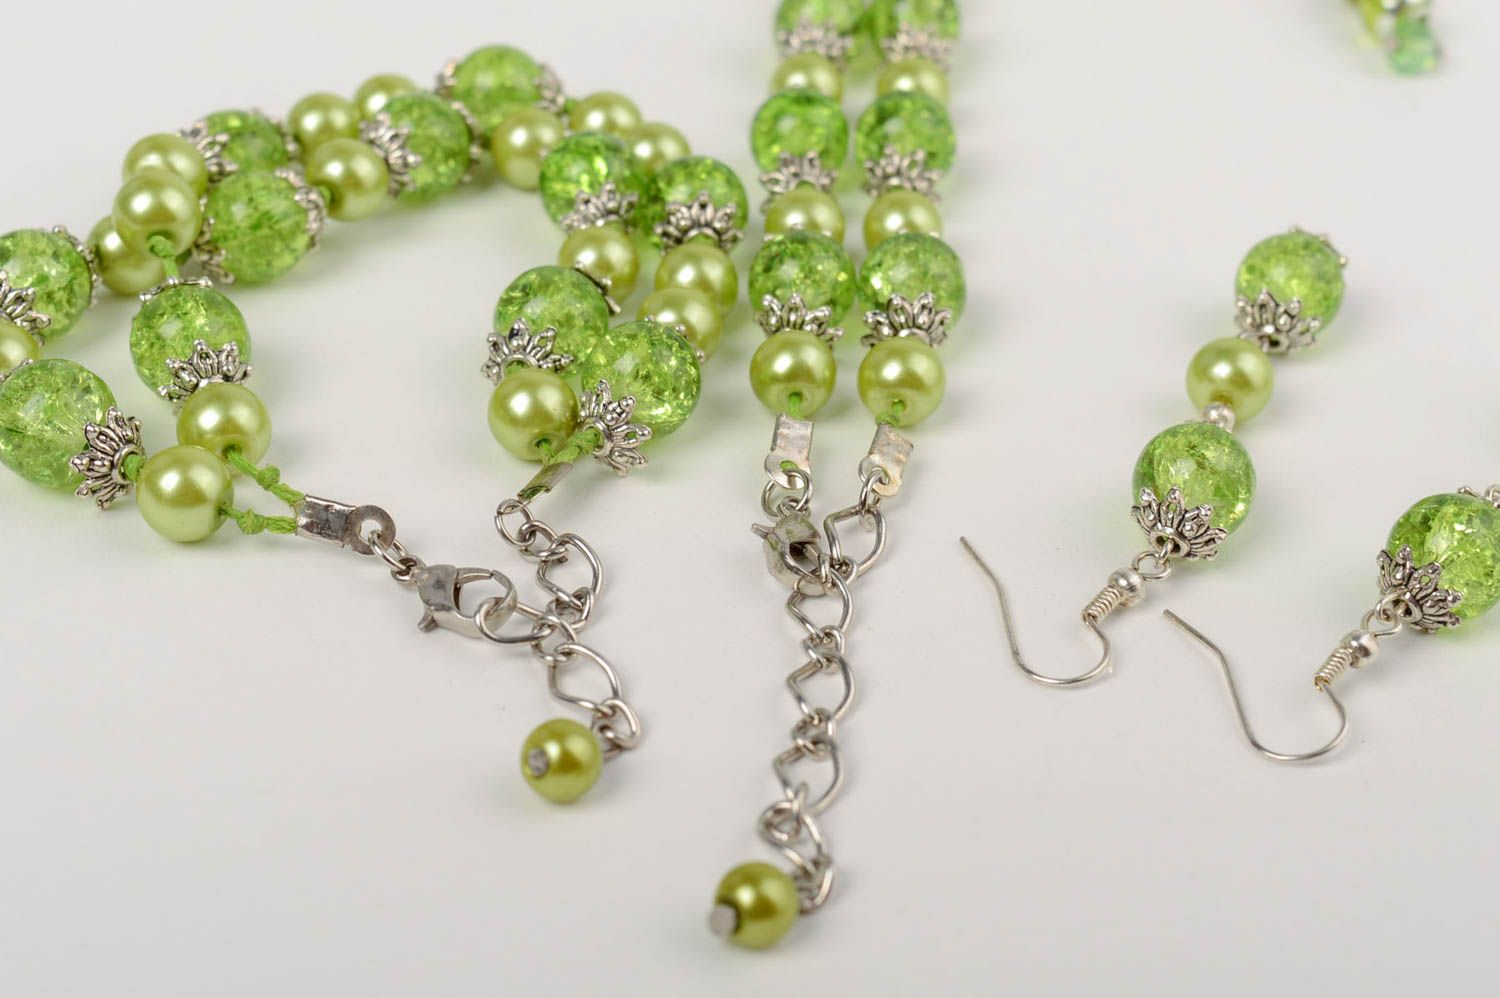 Handmade Venetian glass beaded green jewelry set necklace bracelet and earrings photo 4